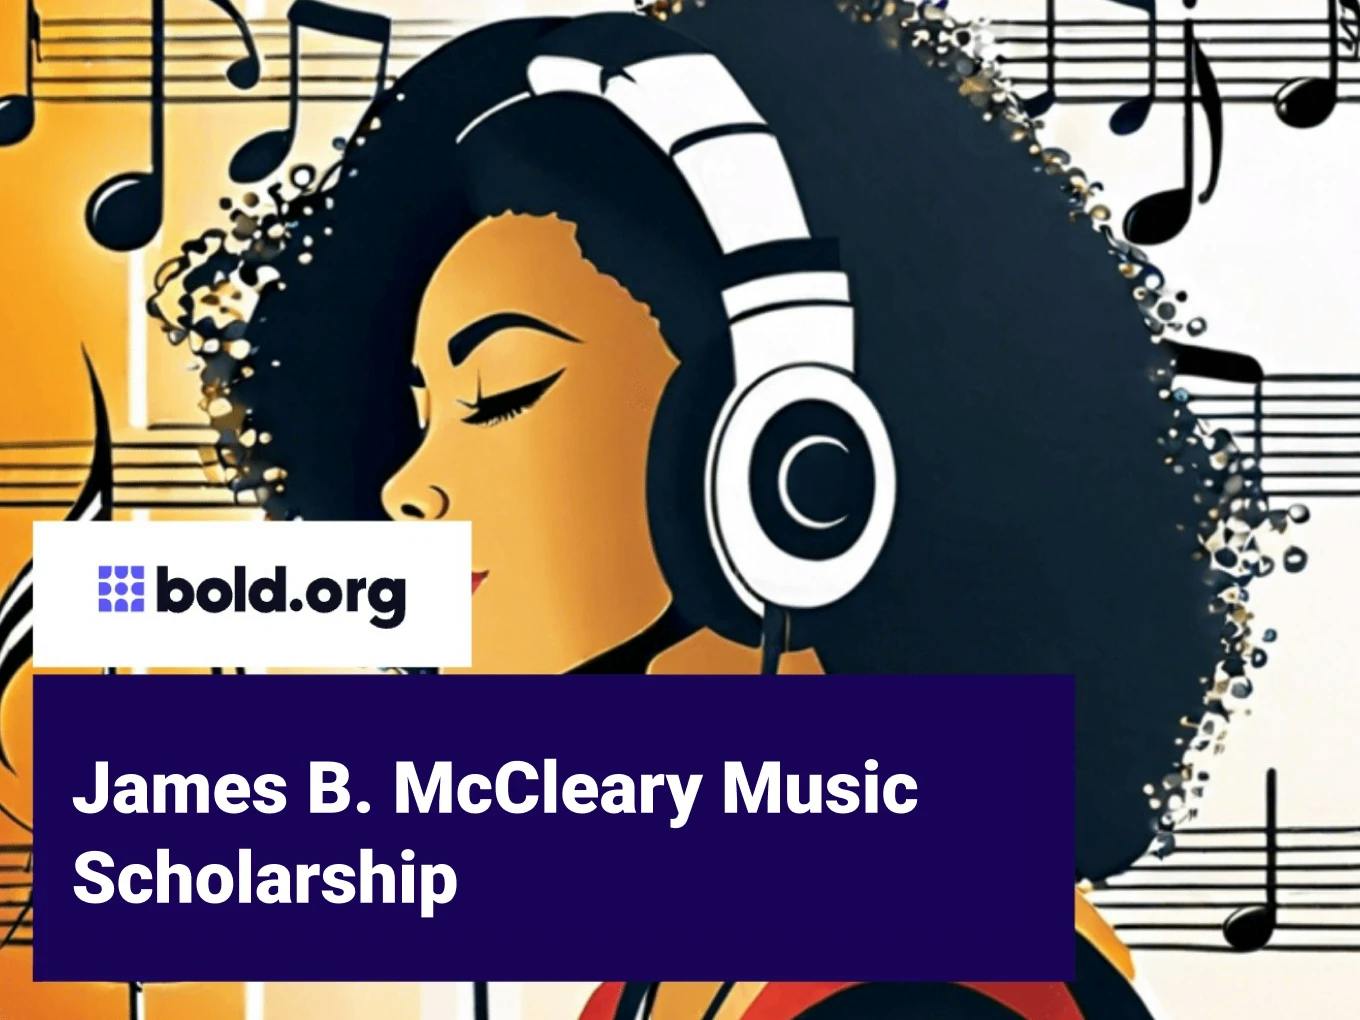 James B. McCleary Music Scholarship